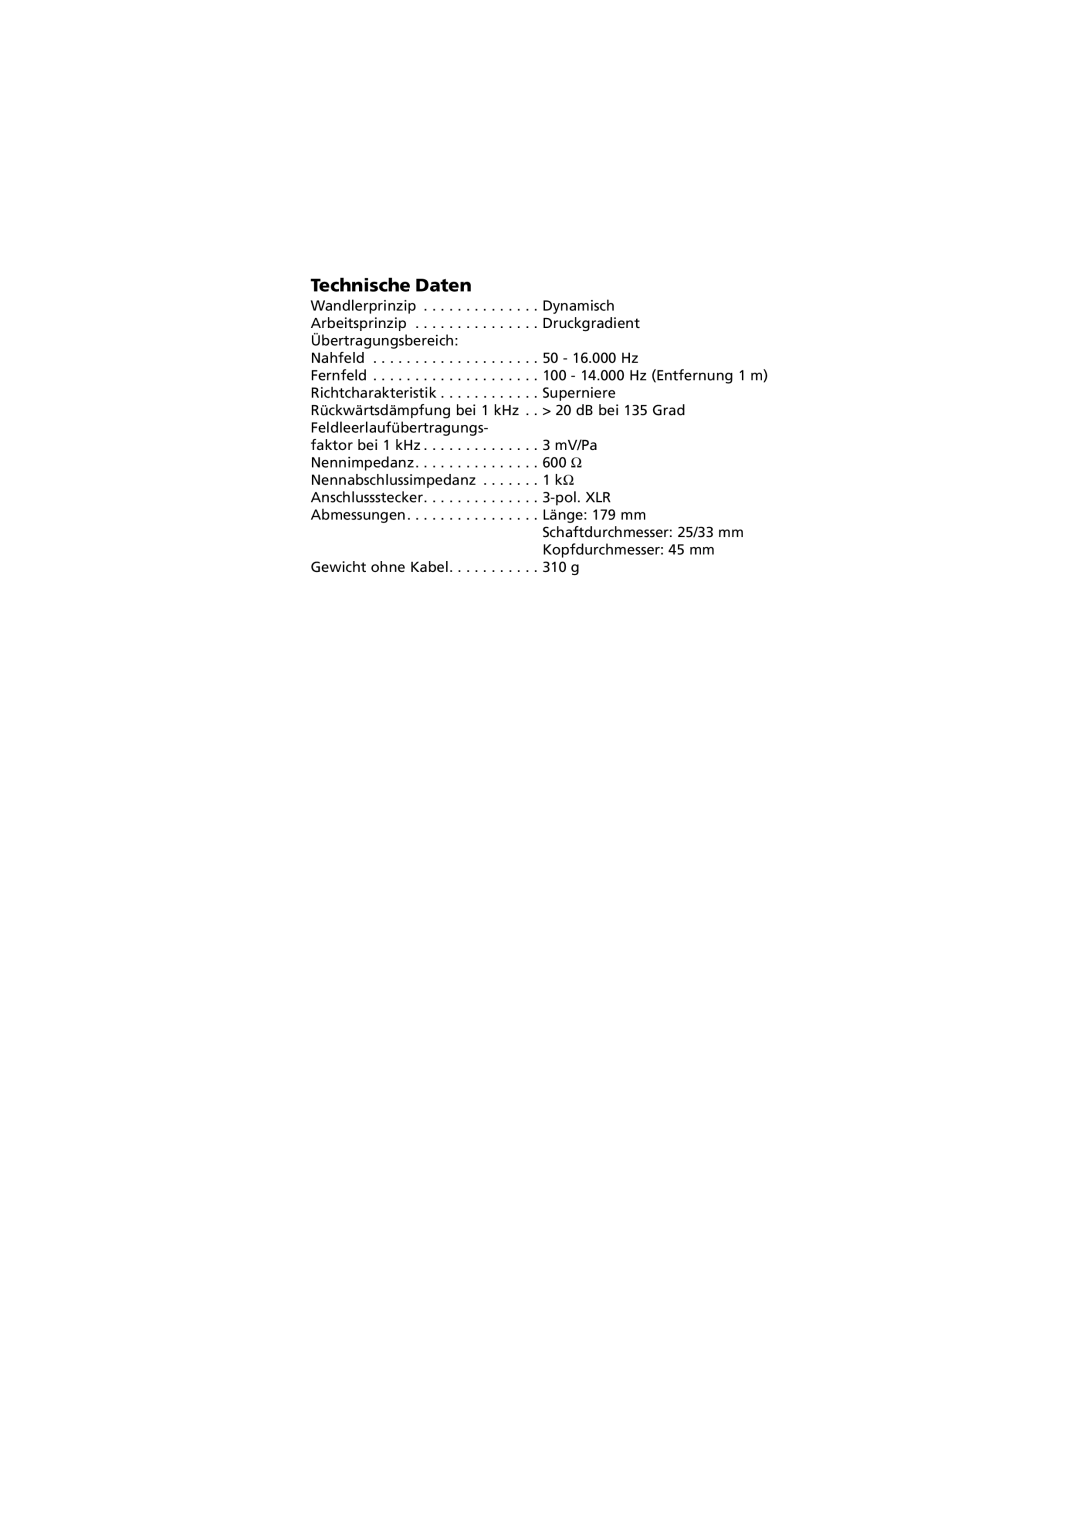 Beyerdynamic Opus 39 manual Technische Daten 